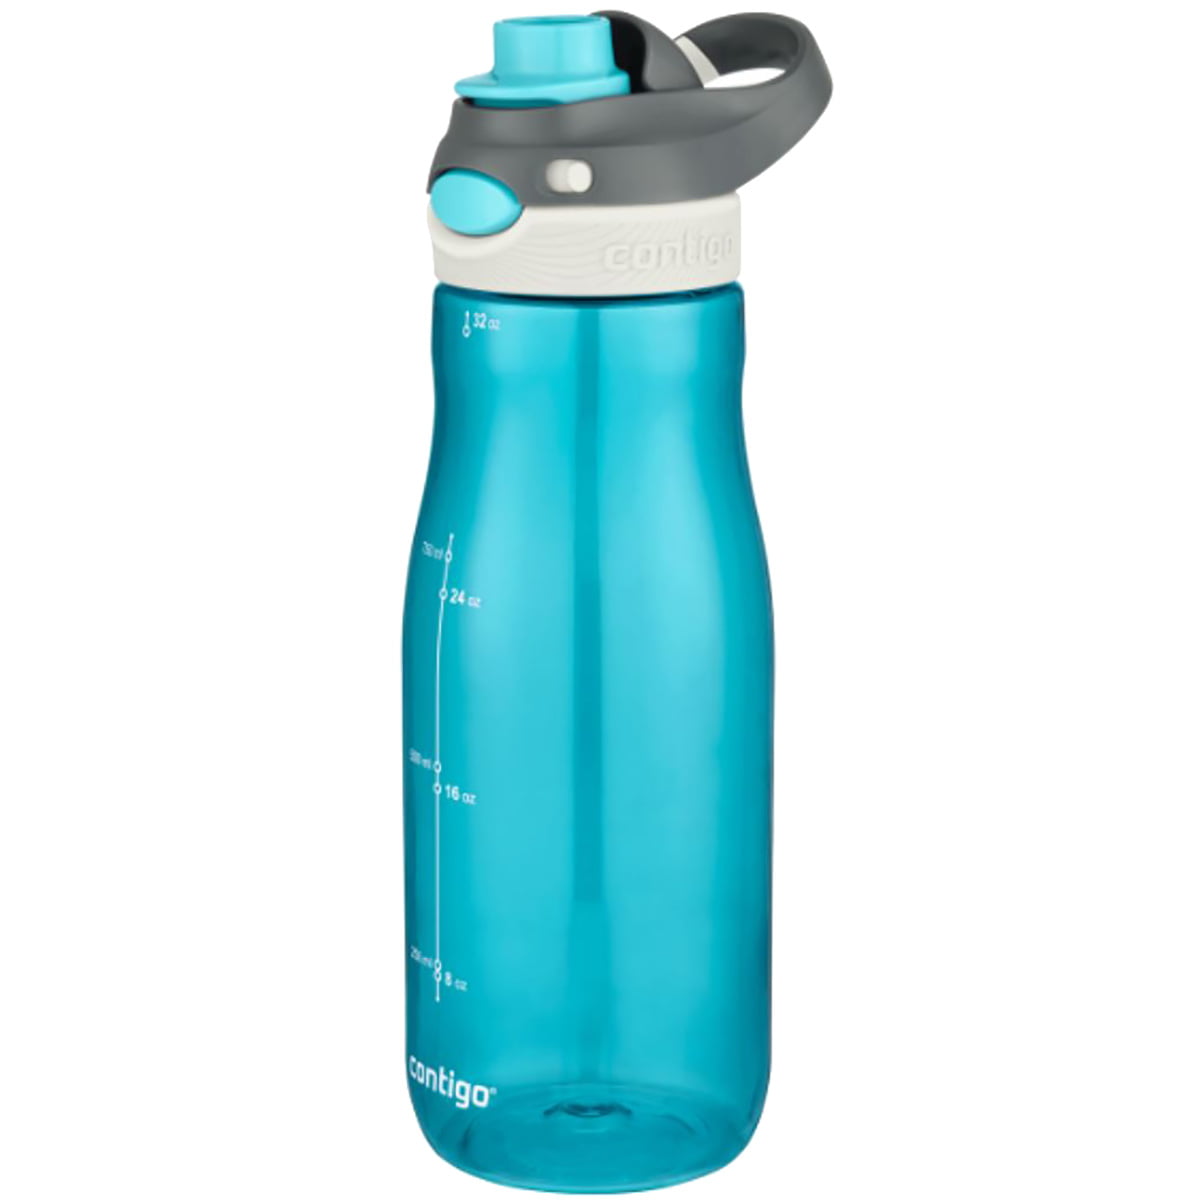 Ecozen hydro Bluey 430ml Stor bottle - AliExpress